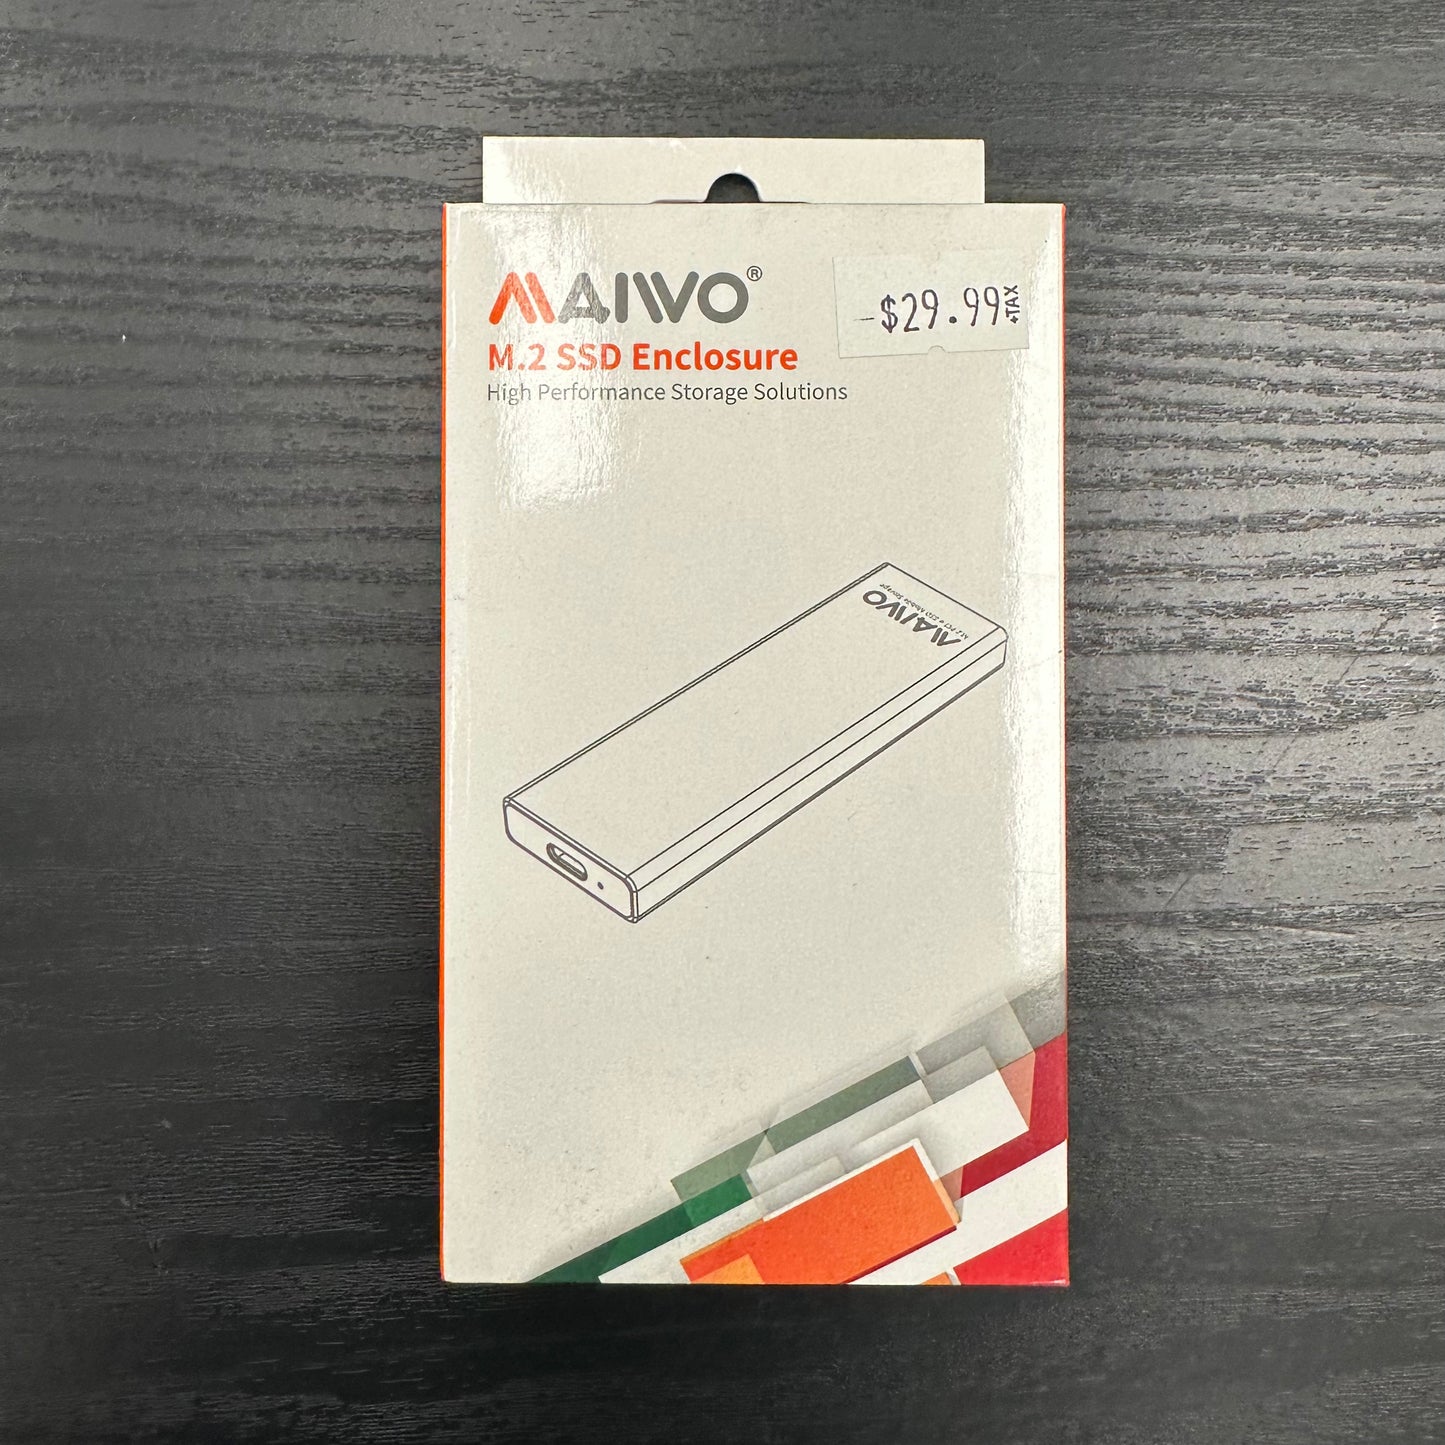 AAIVO M.2 SSD Enclosure